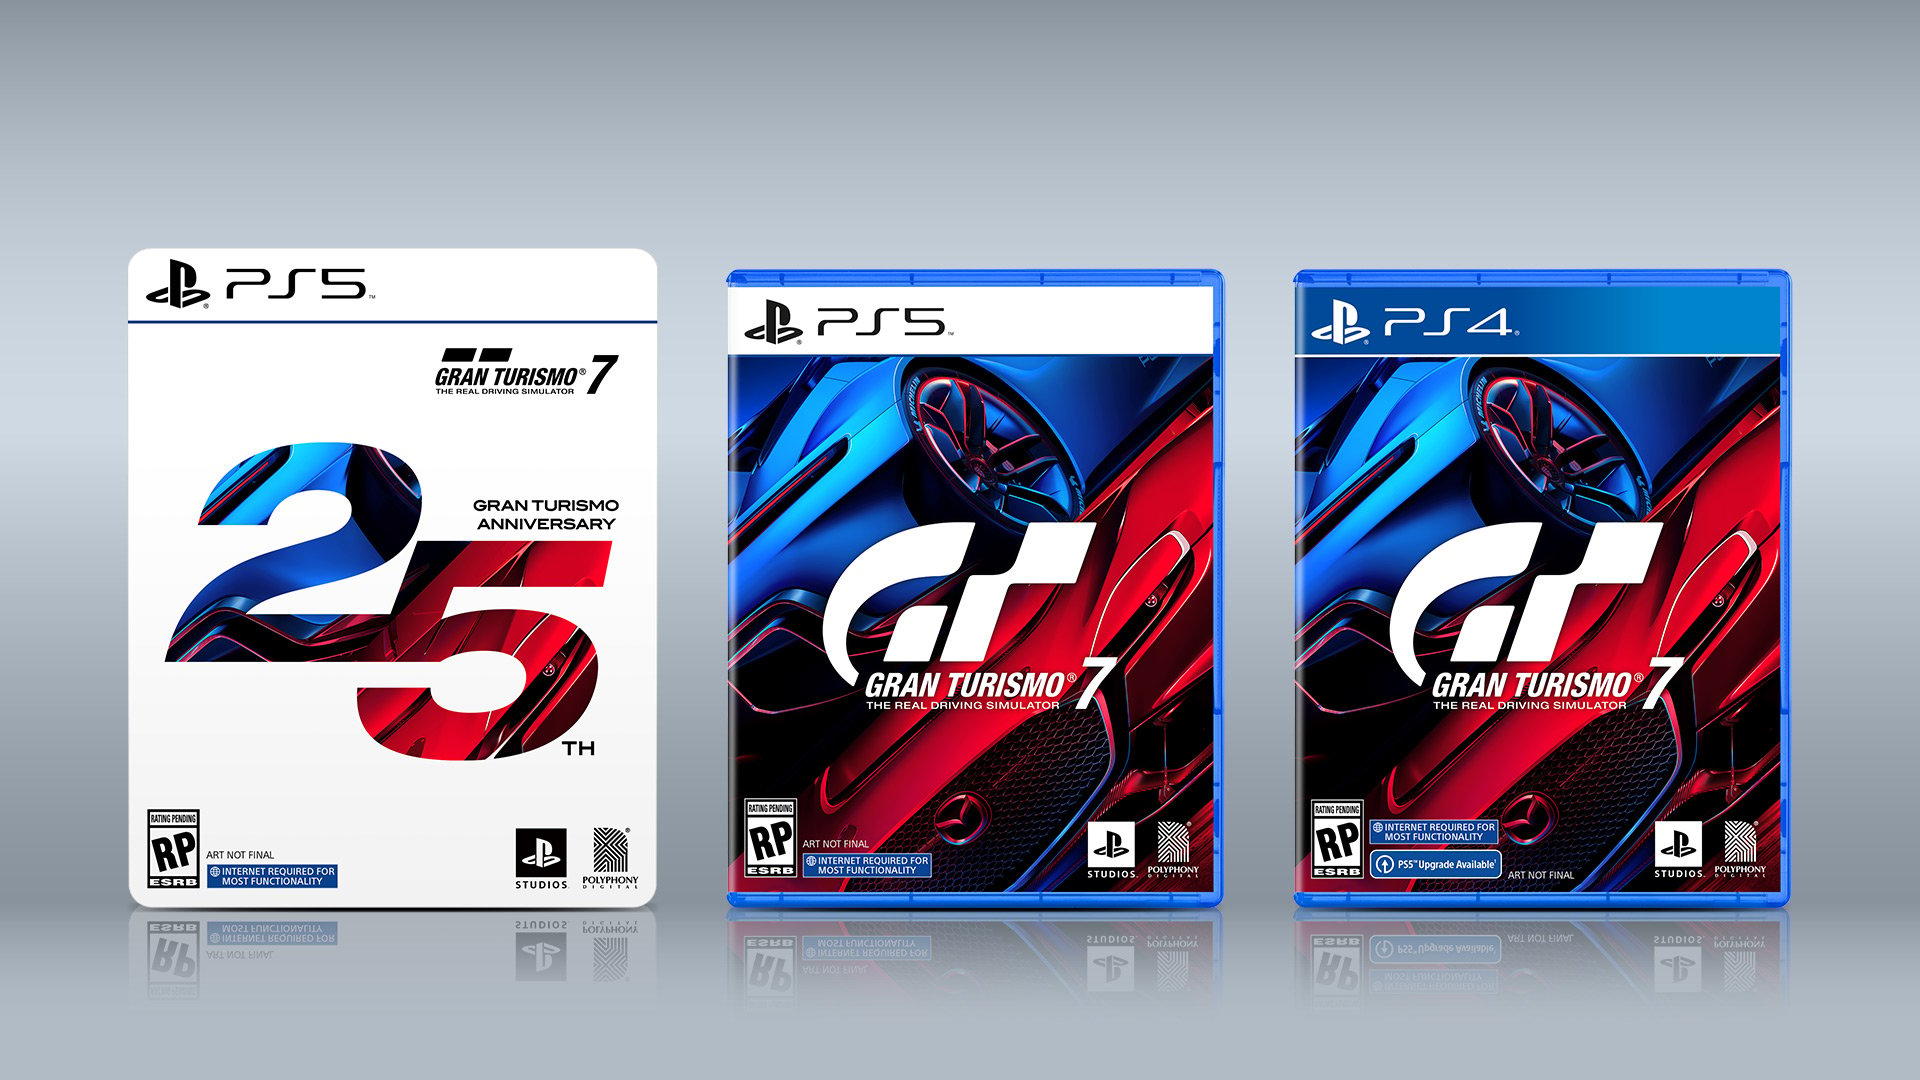 Sony PS5 Gran Turismo 7 25th Anniversary Edition Video Game - US